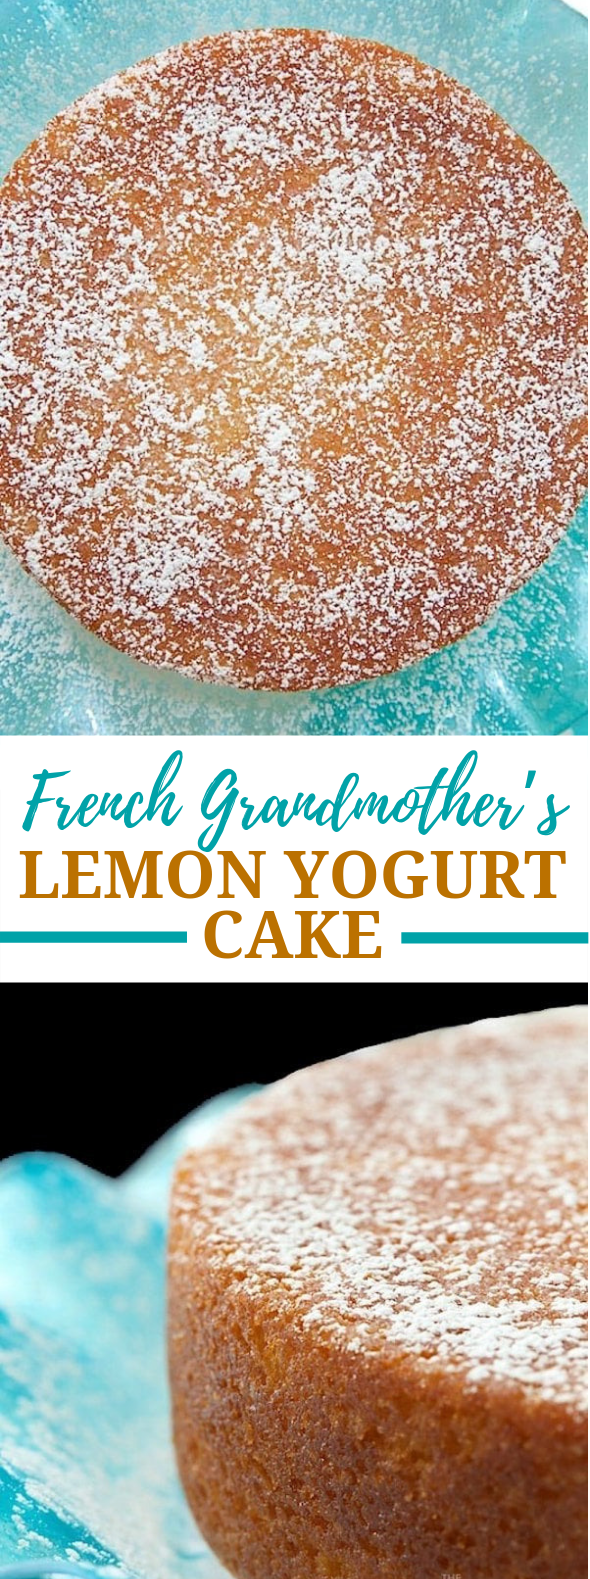 French Grandmother’s Lemon Yogurt Cake #desserts #cakerecipe